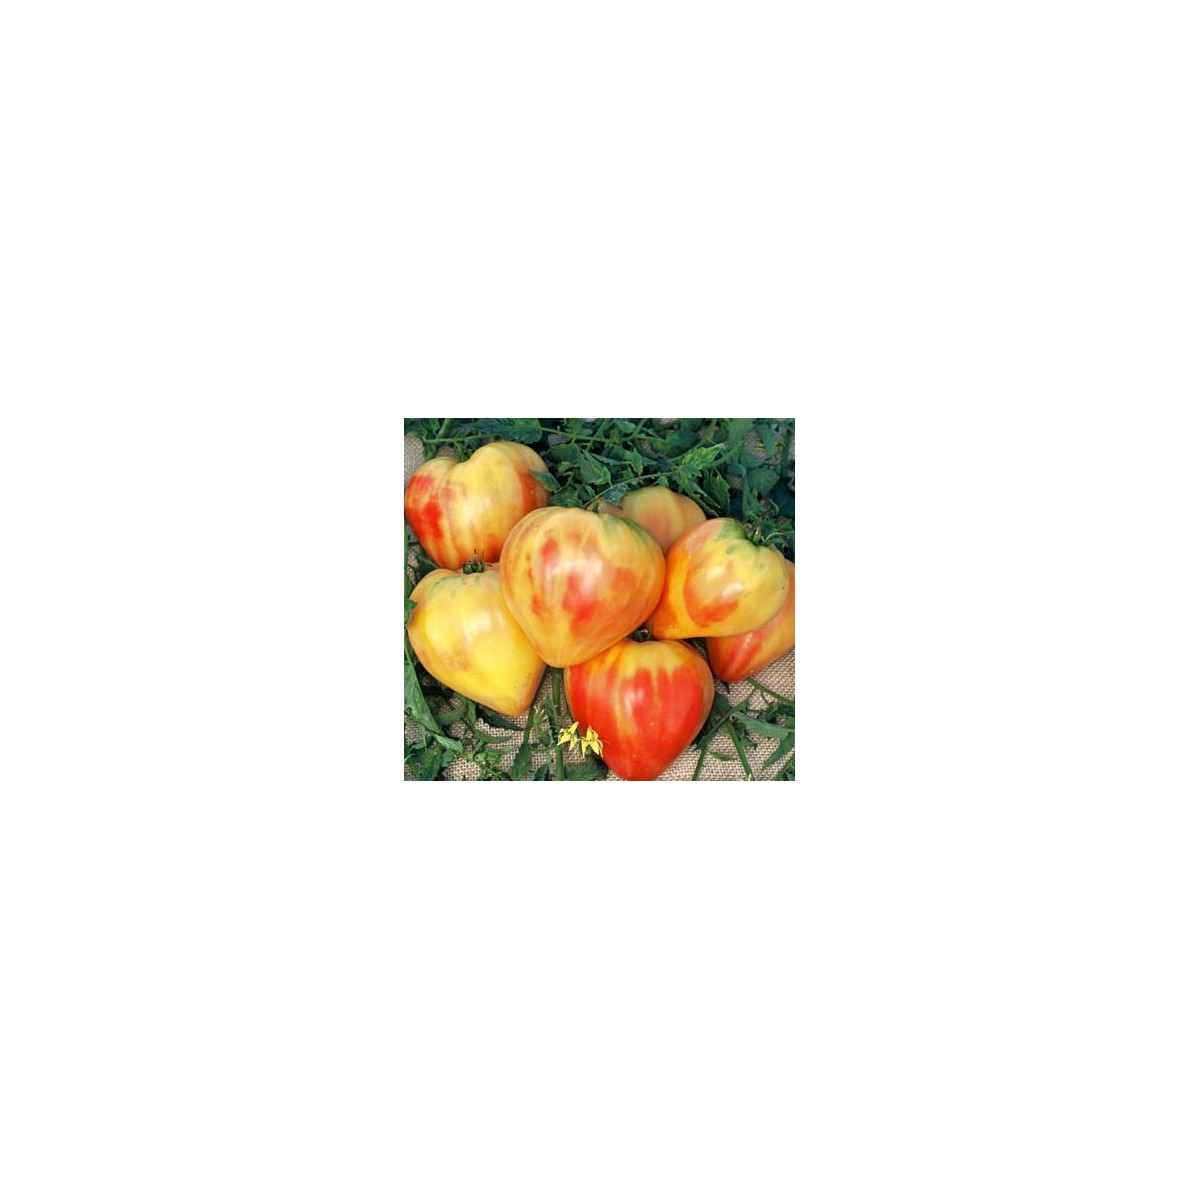 Rajče oranžové - prodej semen rajčat - 6 ks